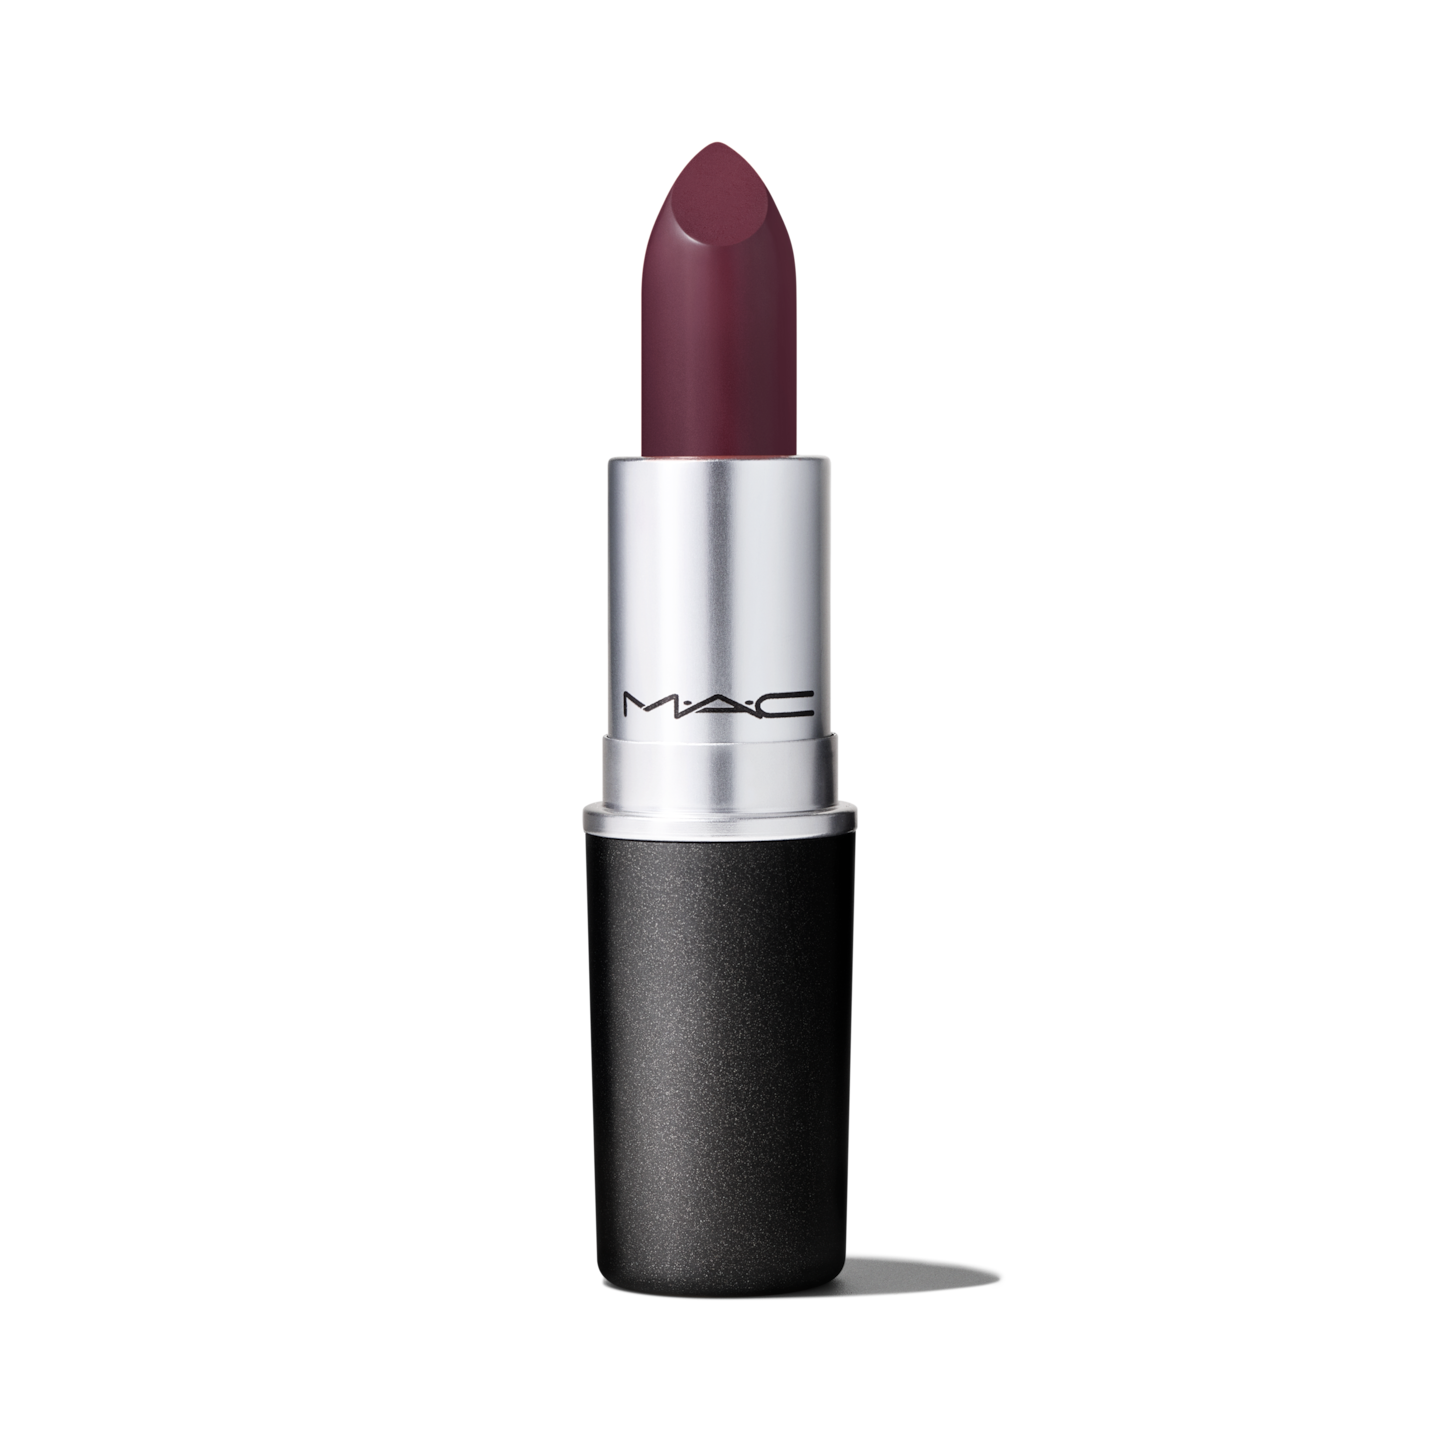 MAC Lipstick | Marrakesh, Velvet Teddy, Mehr & Taupe Lipsticks | MAC Cosmetics - Official